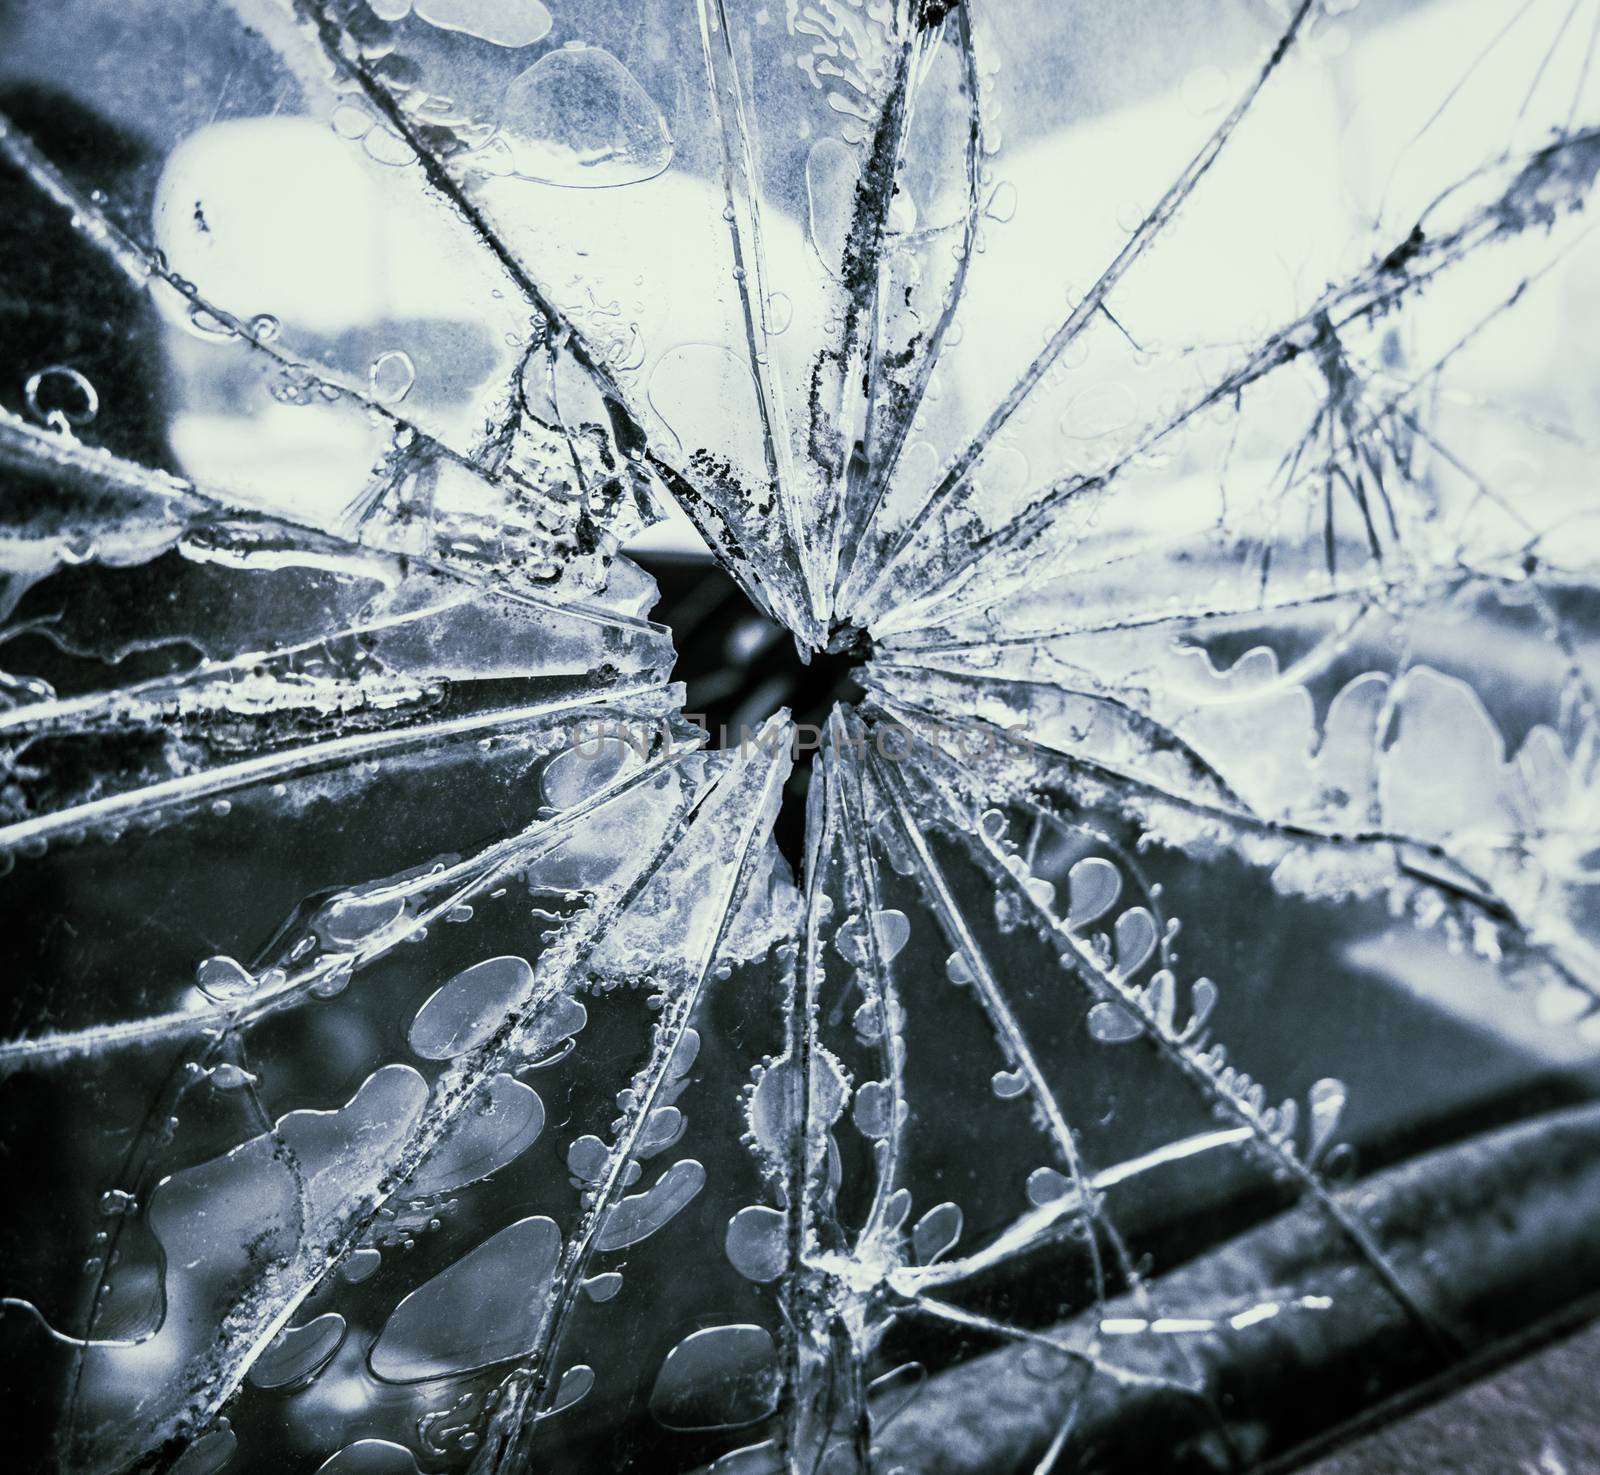 Smashed Truck Window by mrdoomits